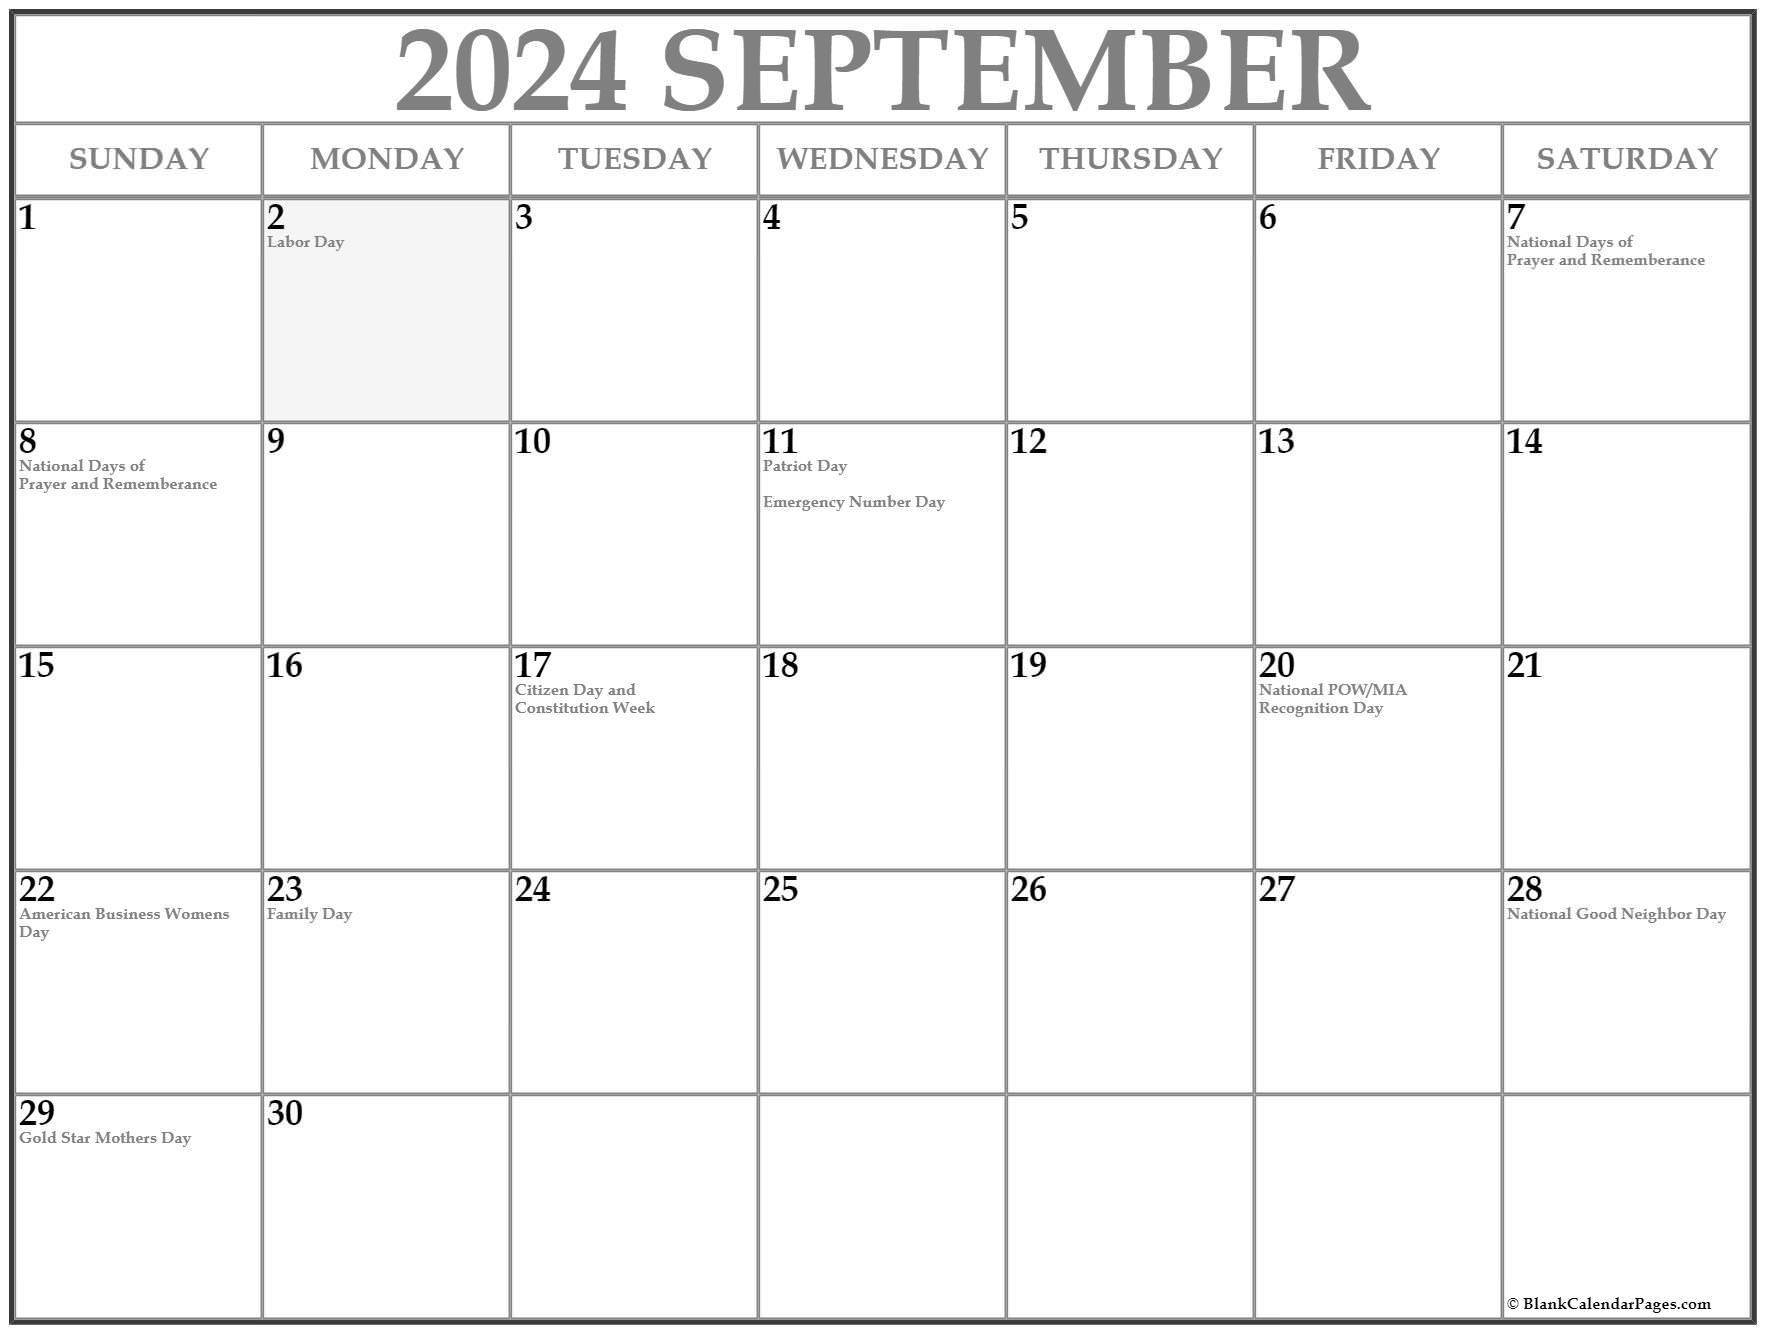 september-2024-with-holidays-calendar